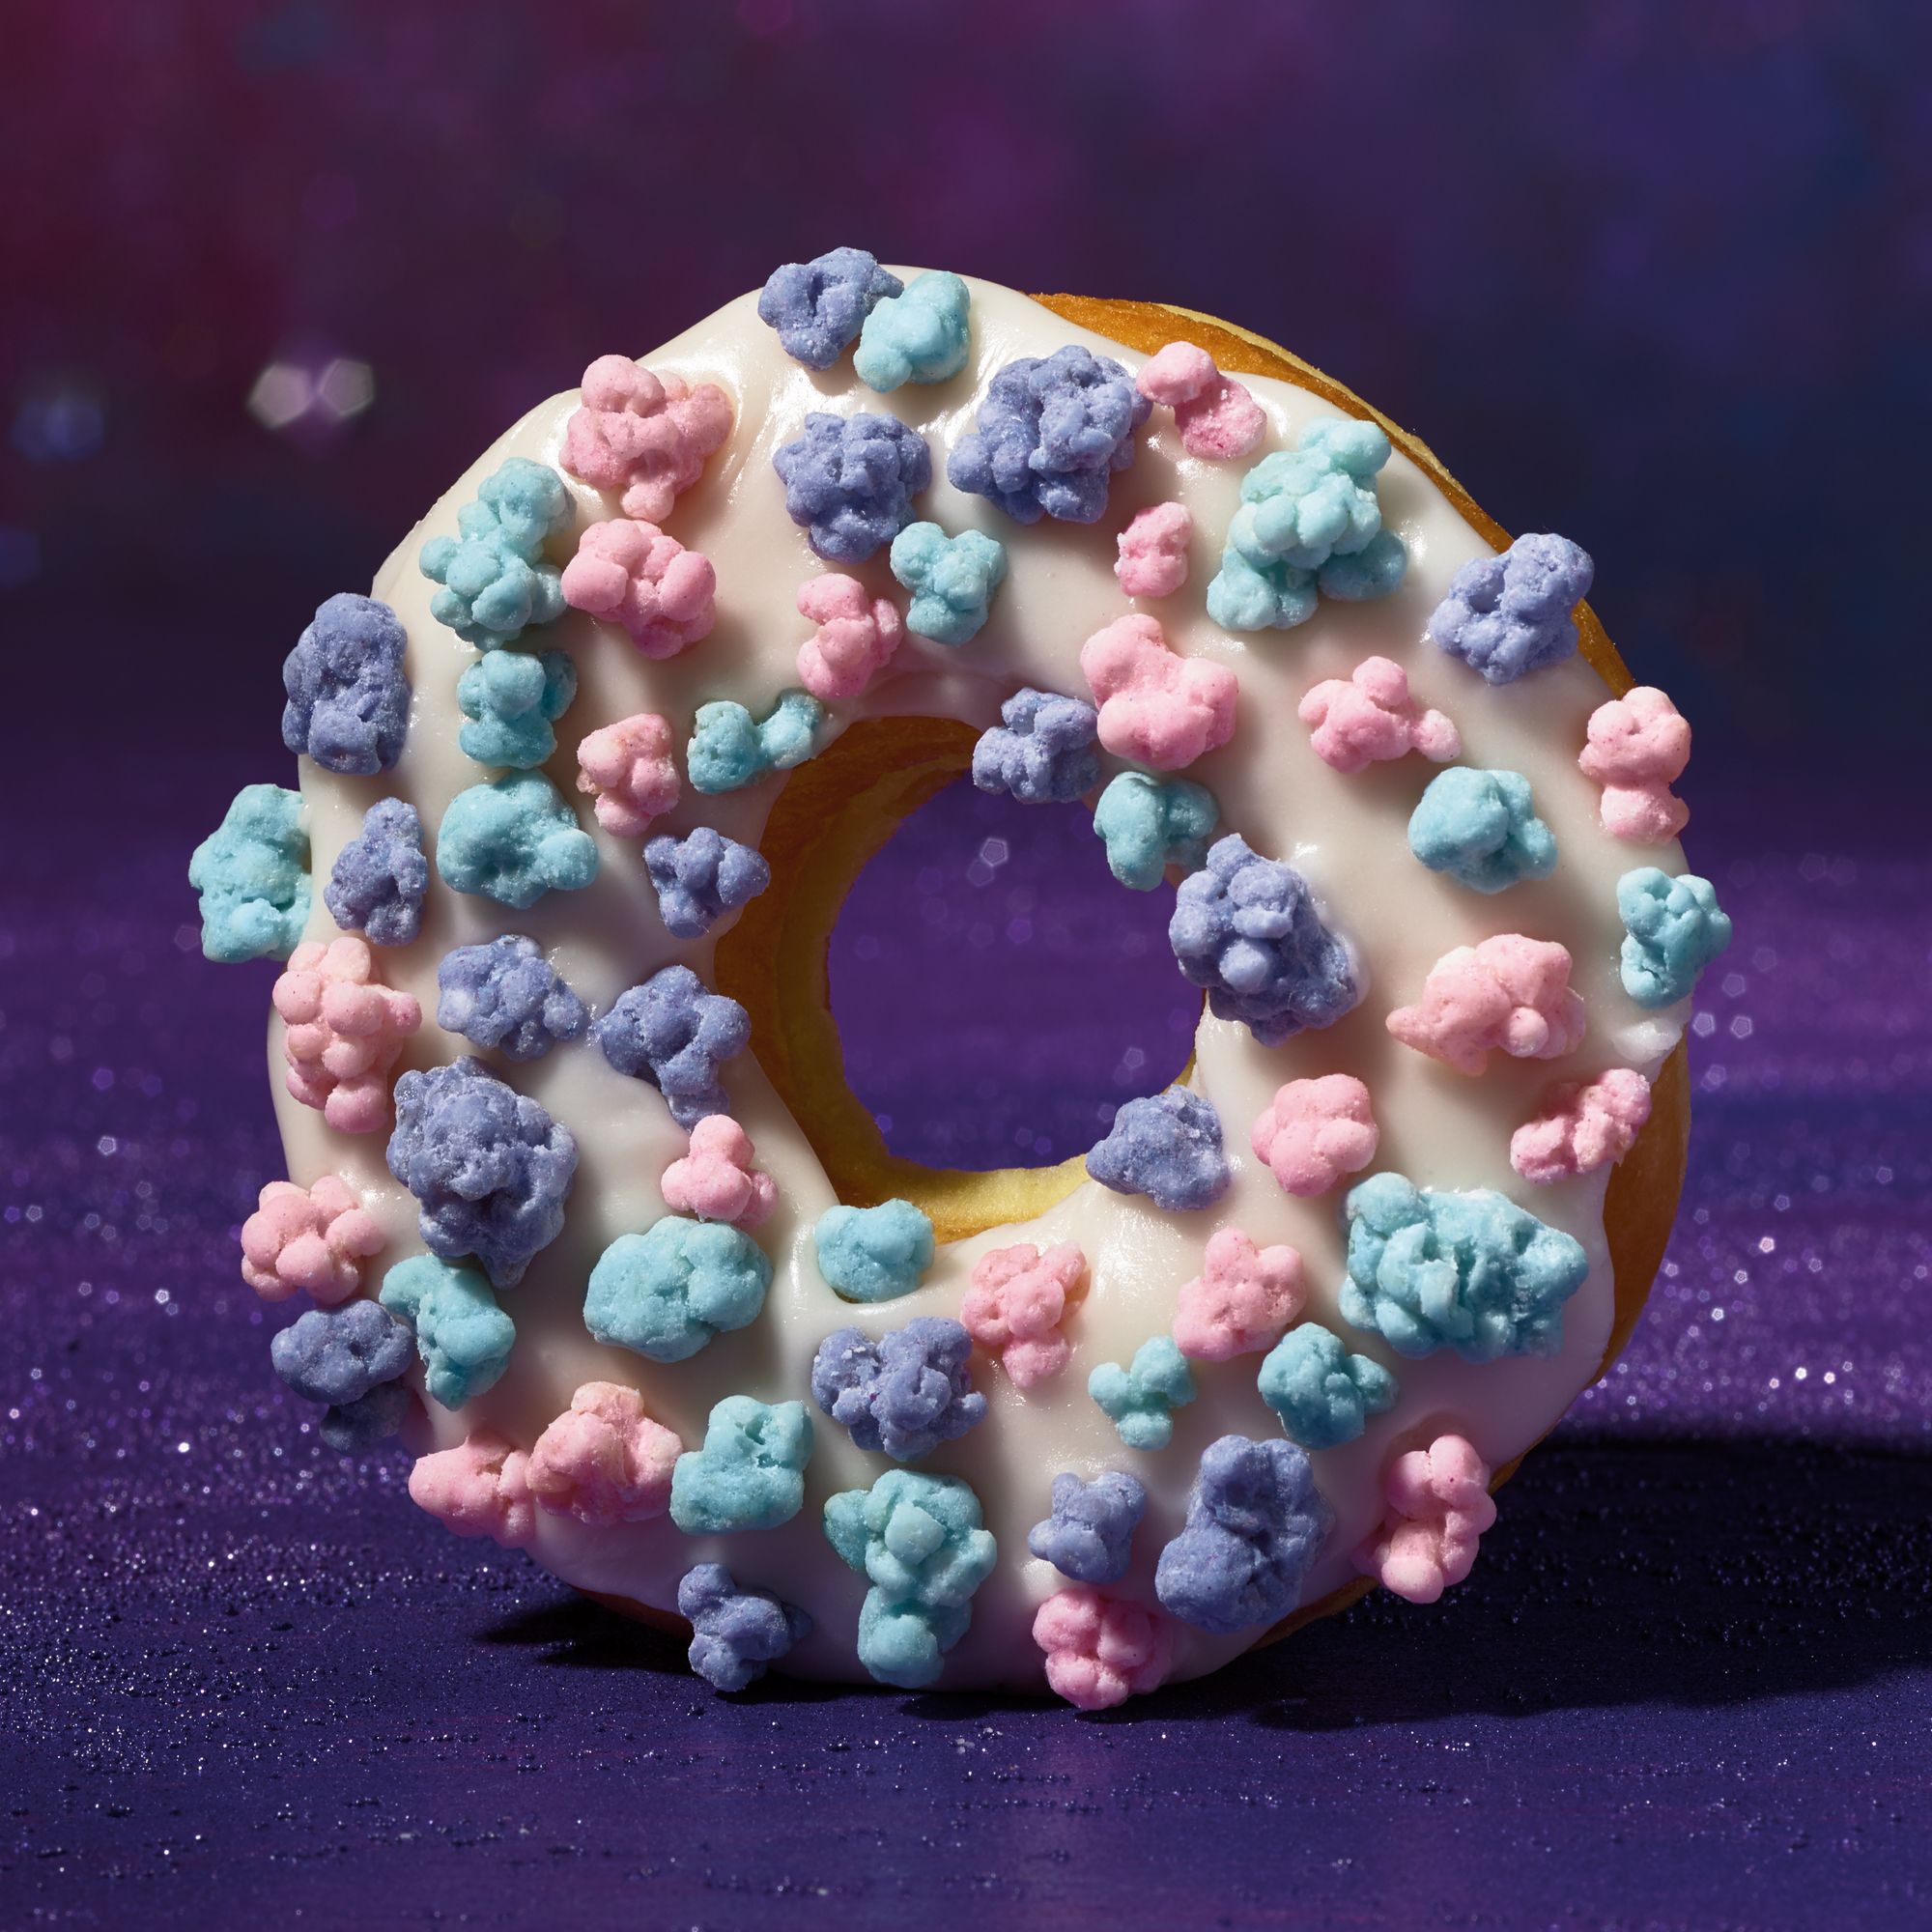 dunkin-donuts-cosmic-donut-1524858599.jpg